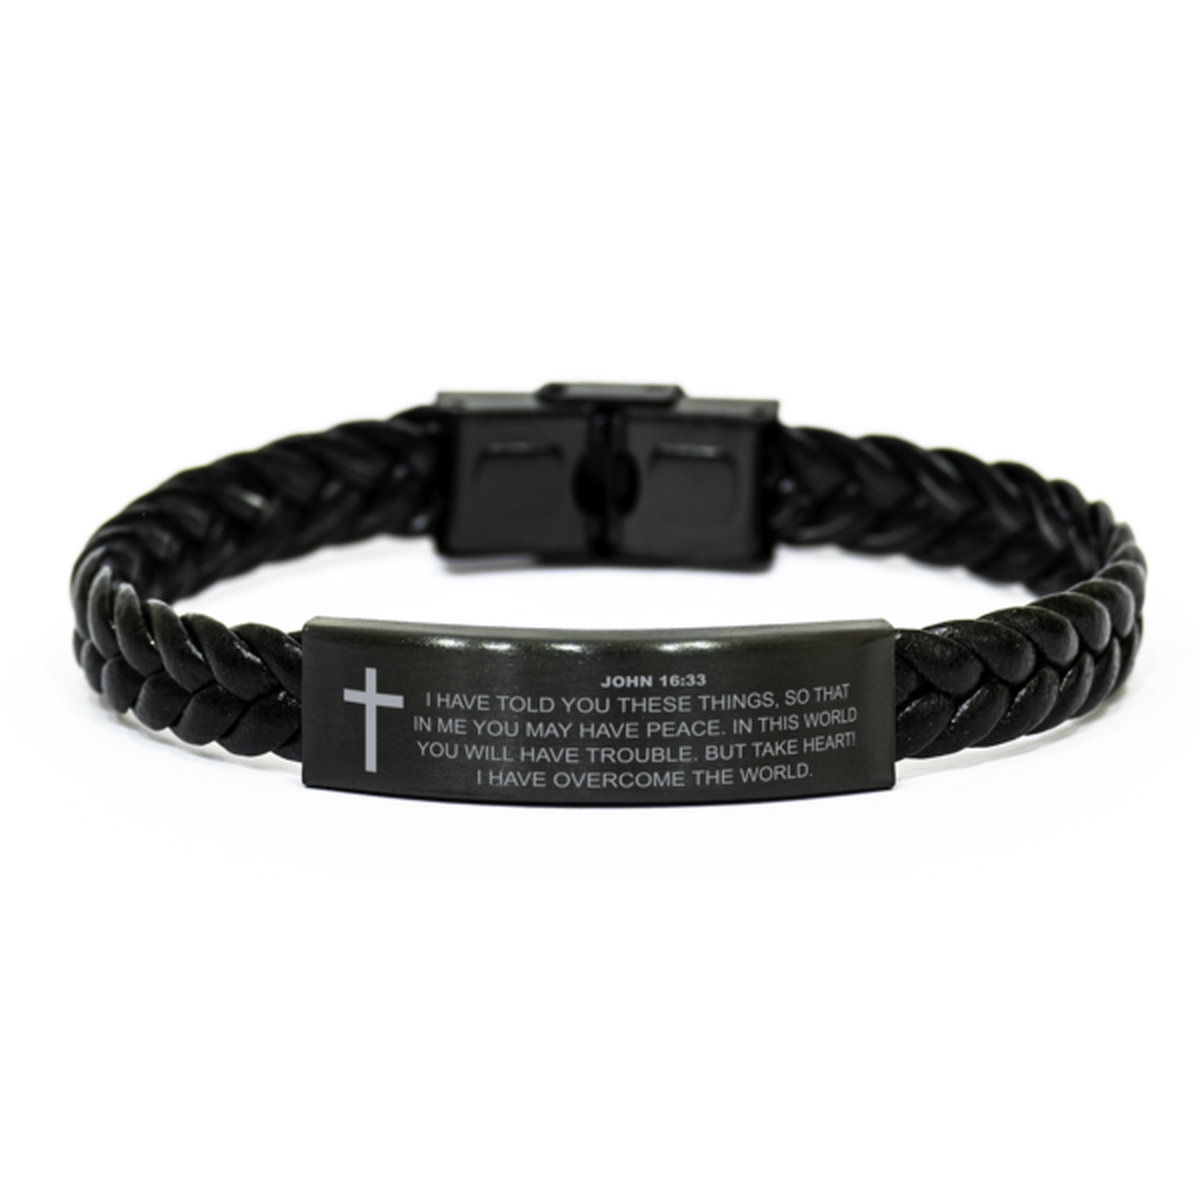 John 16:33 Bracelet, I Have Told You These Things, Bible Verse Bracelet, Christian Bracelet, Braided Leather Bracelet, Easter Gift